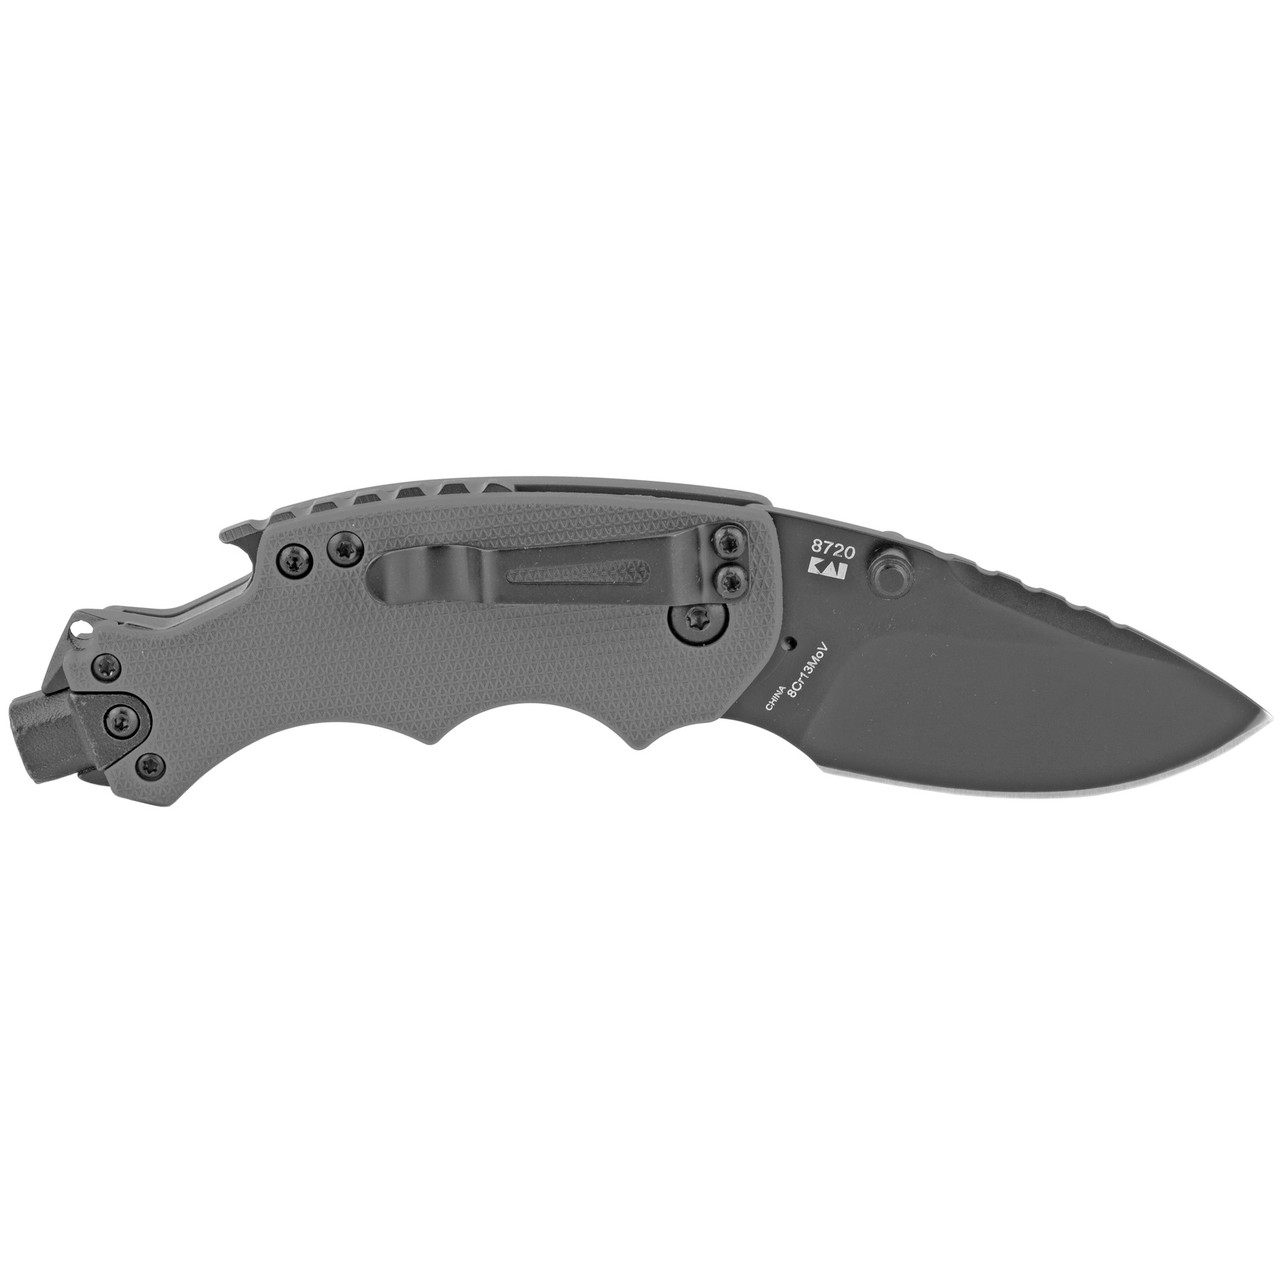 Kershaw Shuffle Multi-function Knife - 5-3/4" Overall Length